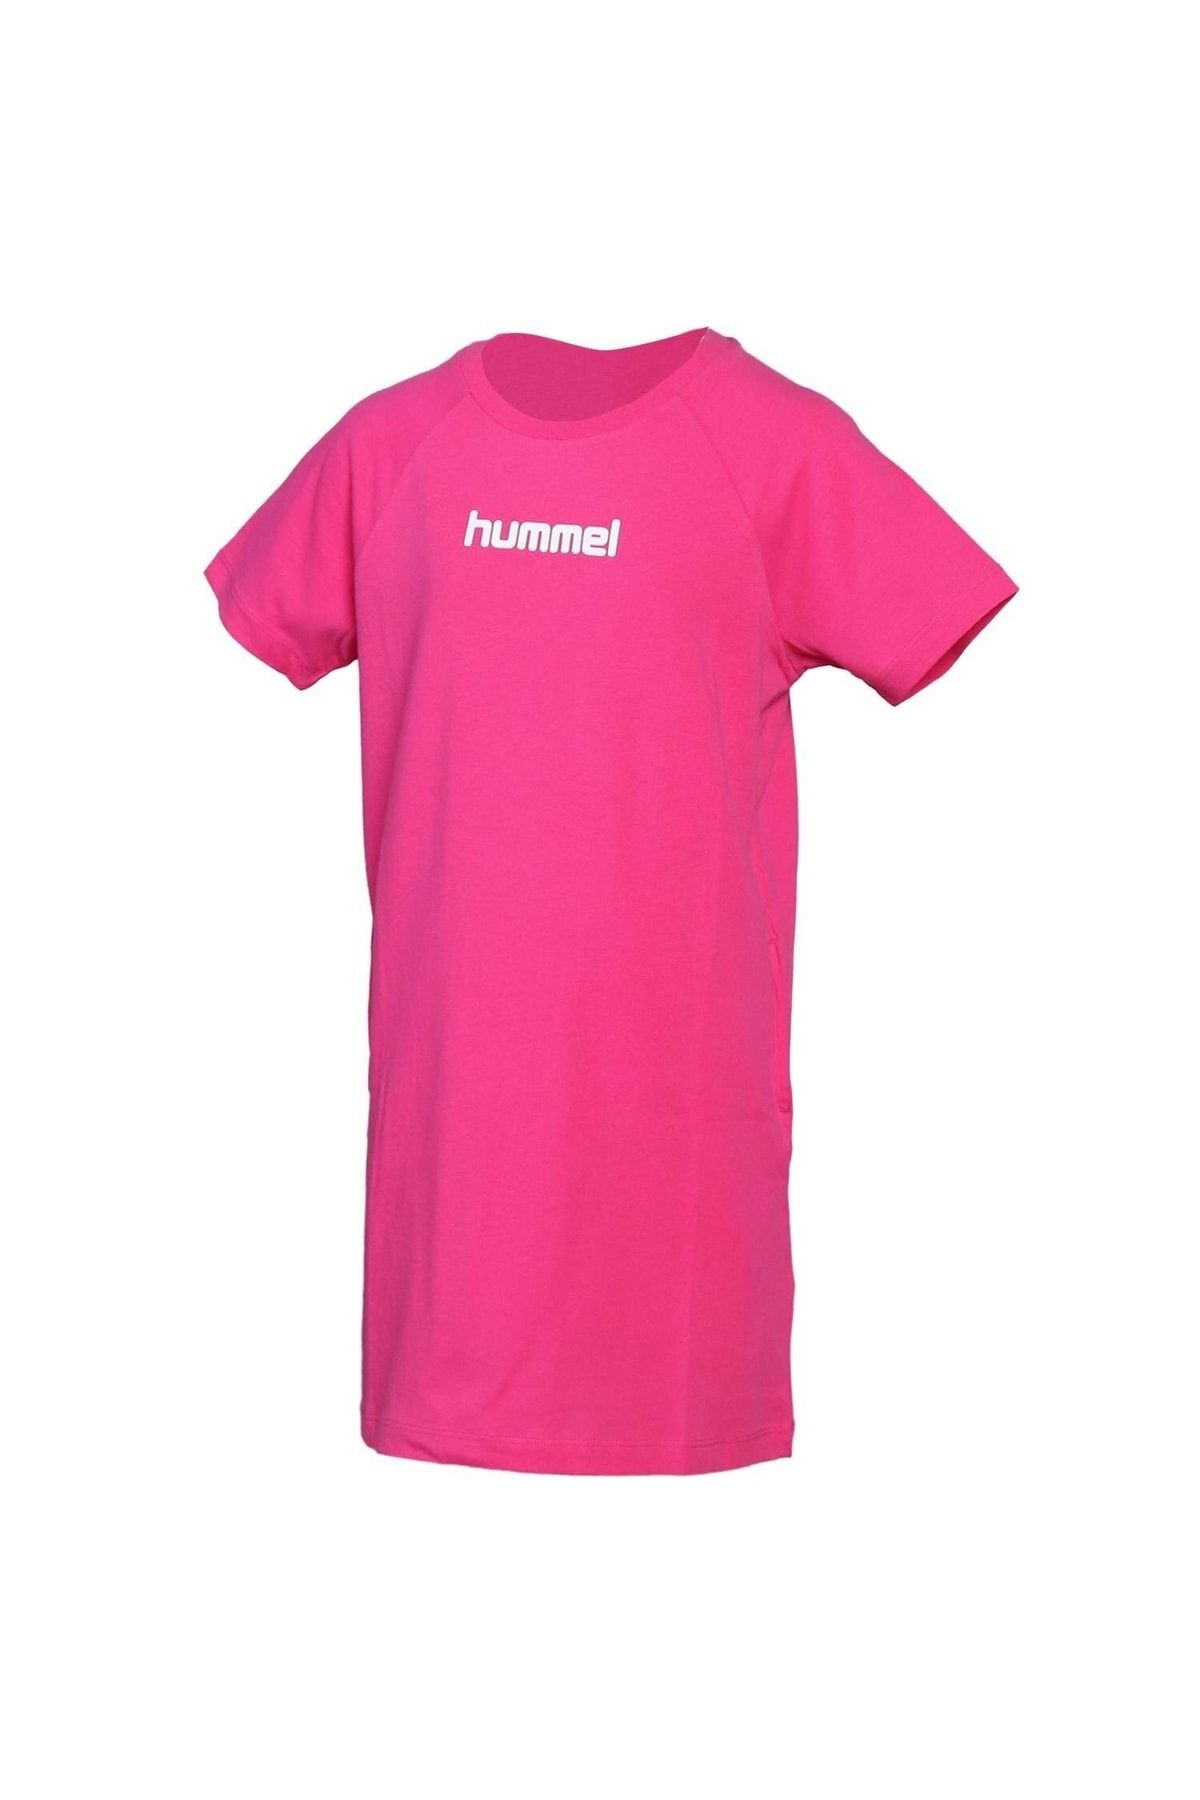 hummel Unisex Çocuk Pembe Monteresso Dress T-Shirt